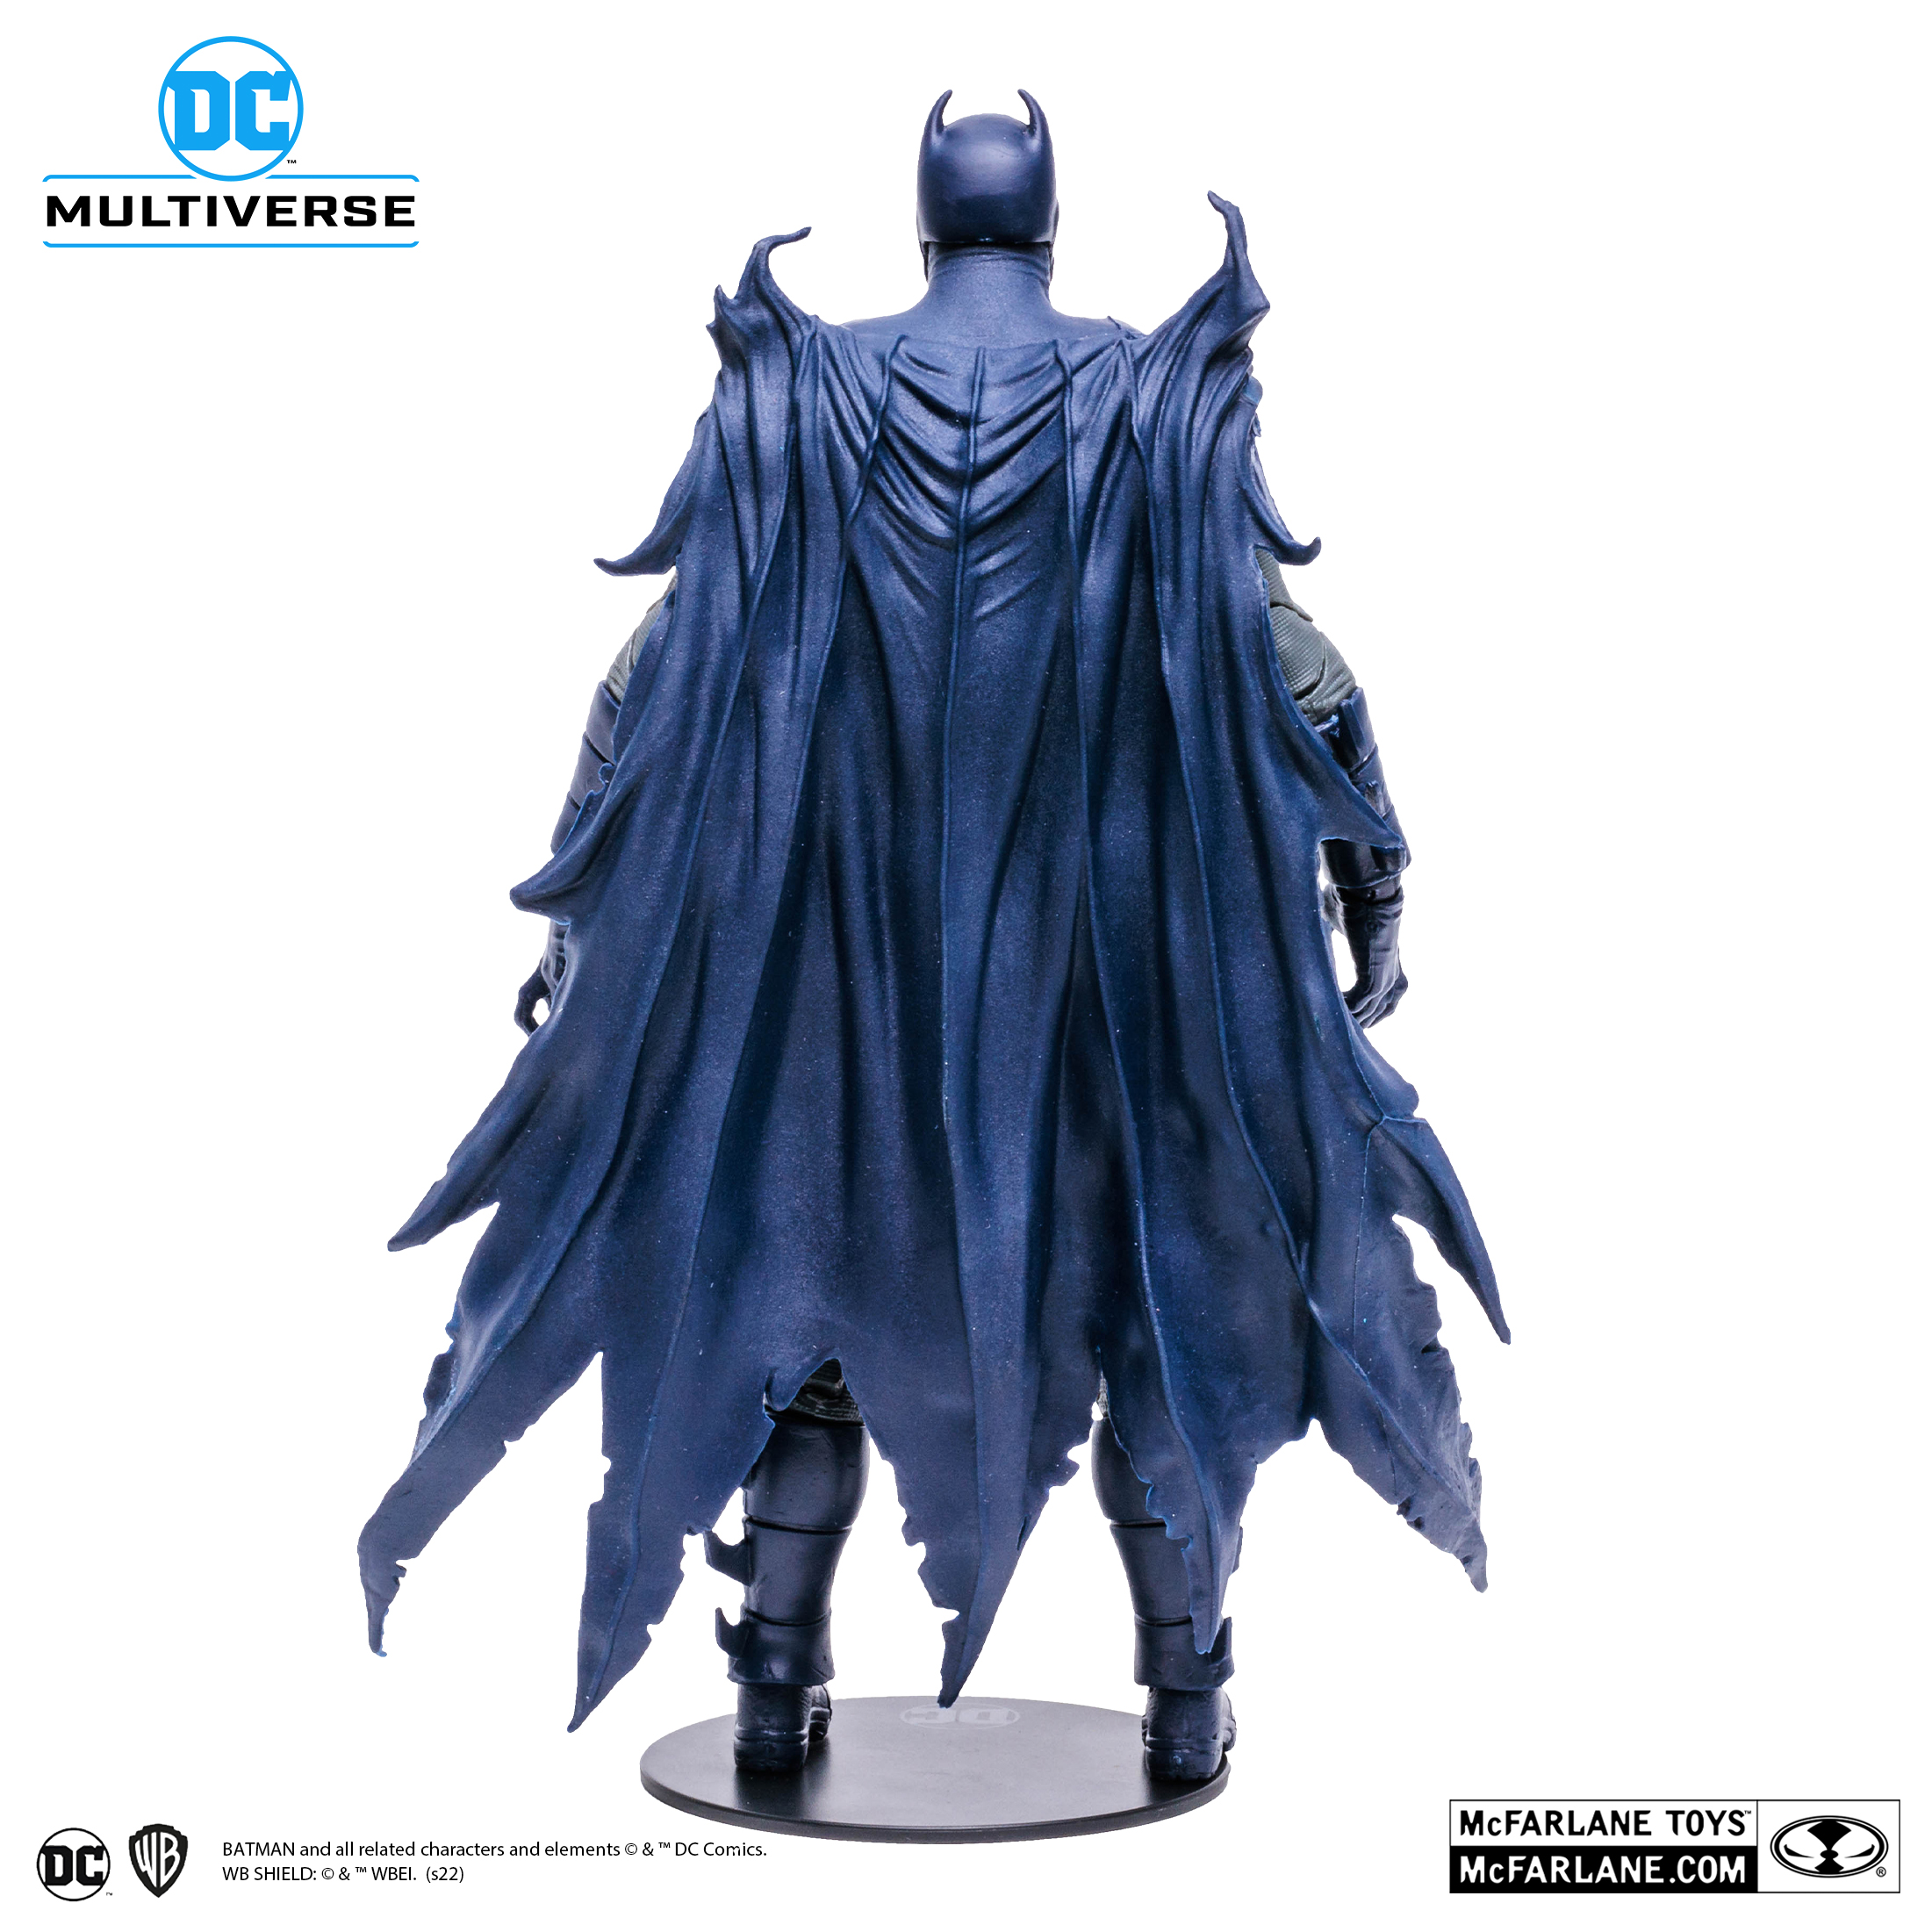 Blackest Night DC Multiverse Batman (Black Lantern) Action Figure (Collect  to Build: Atrocitus)